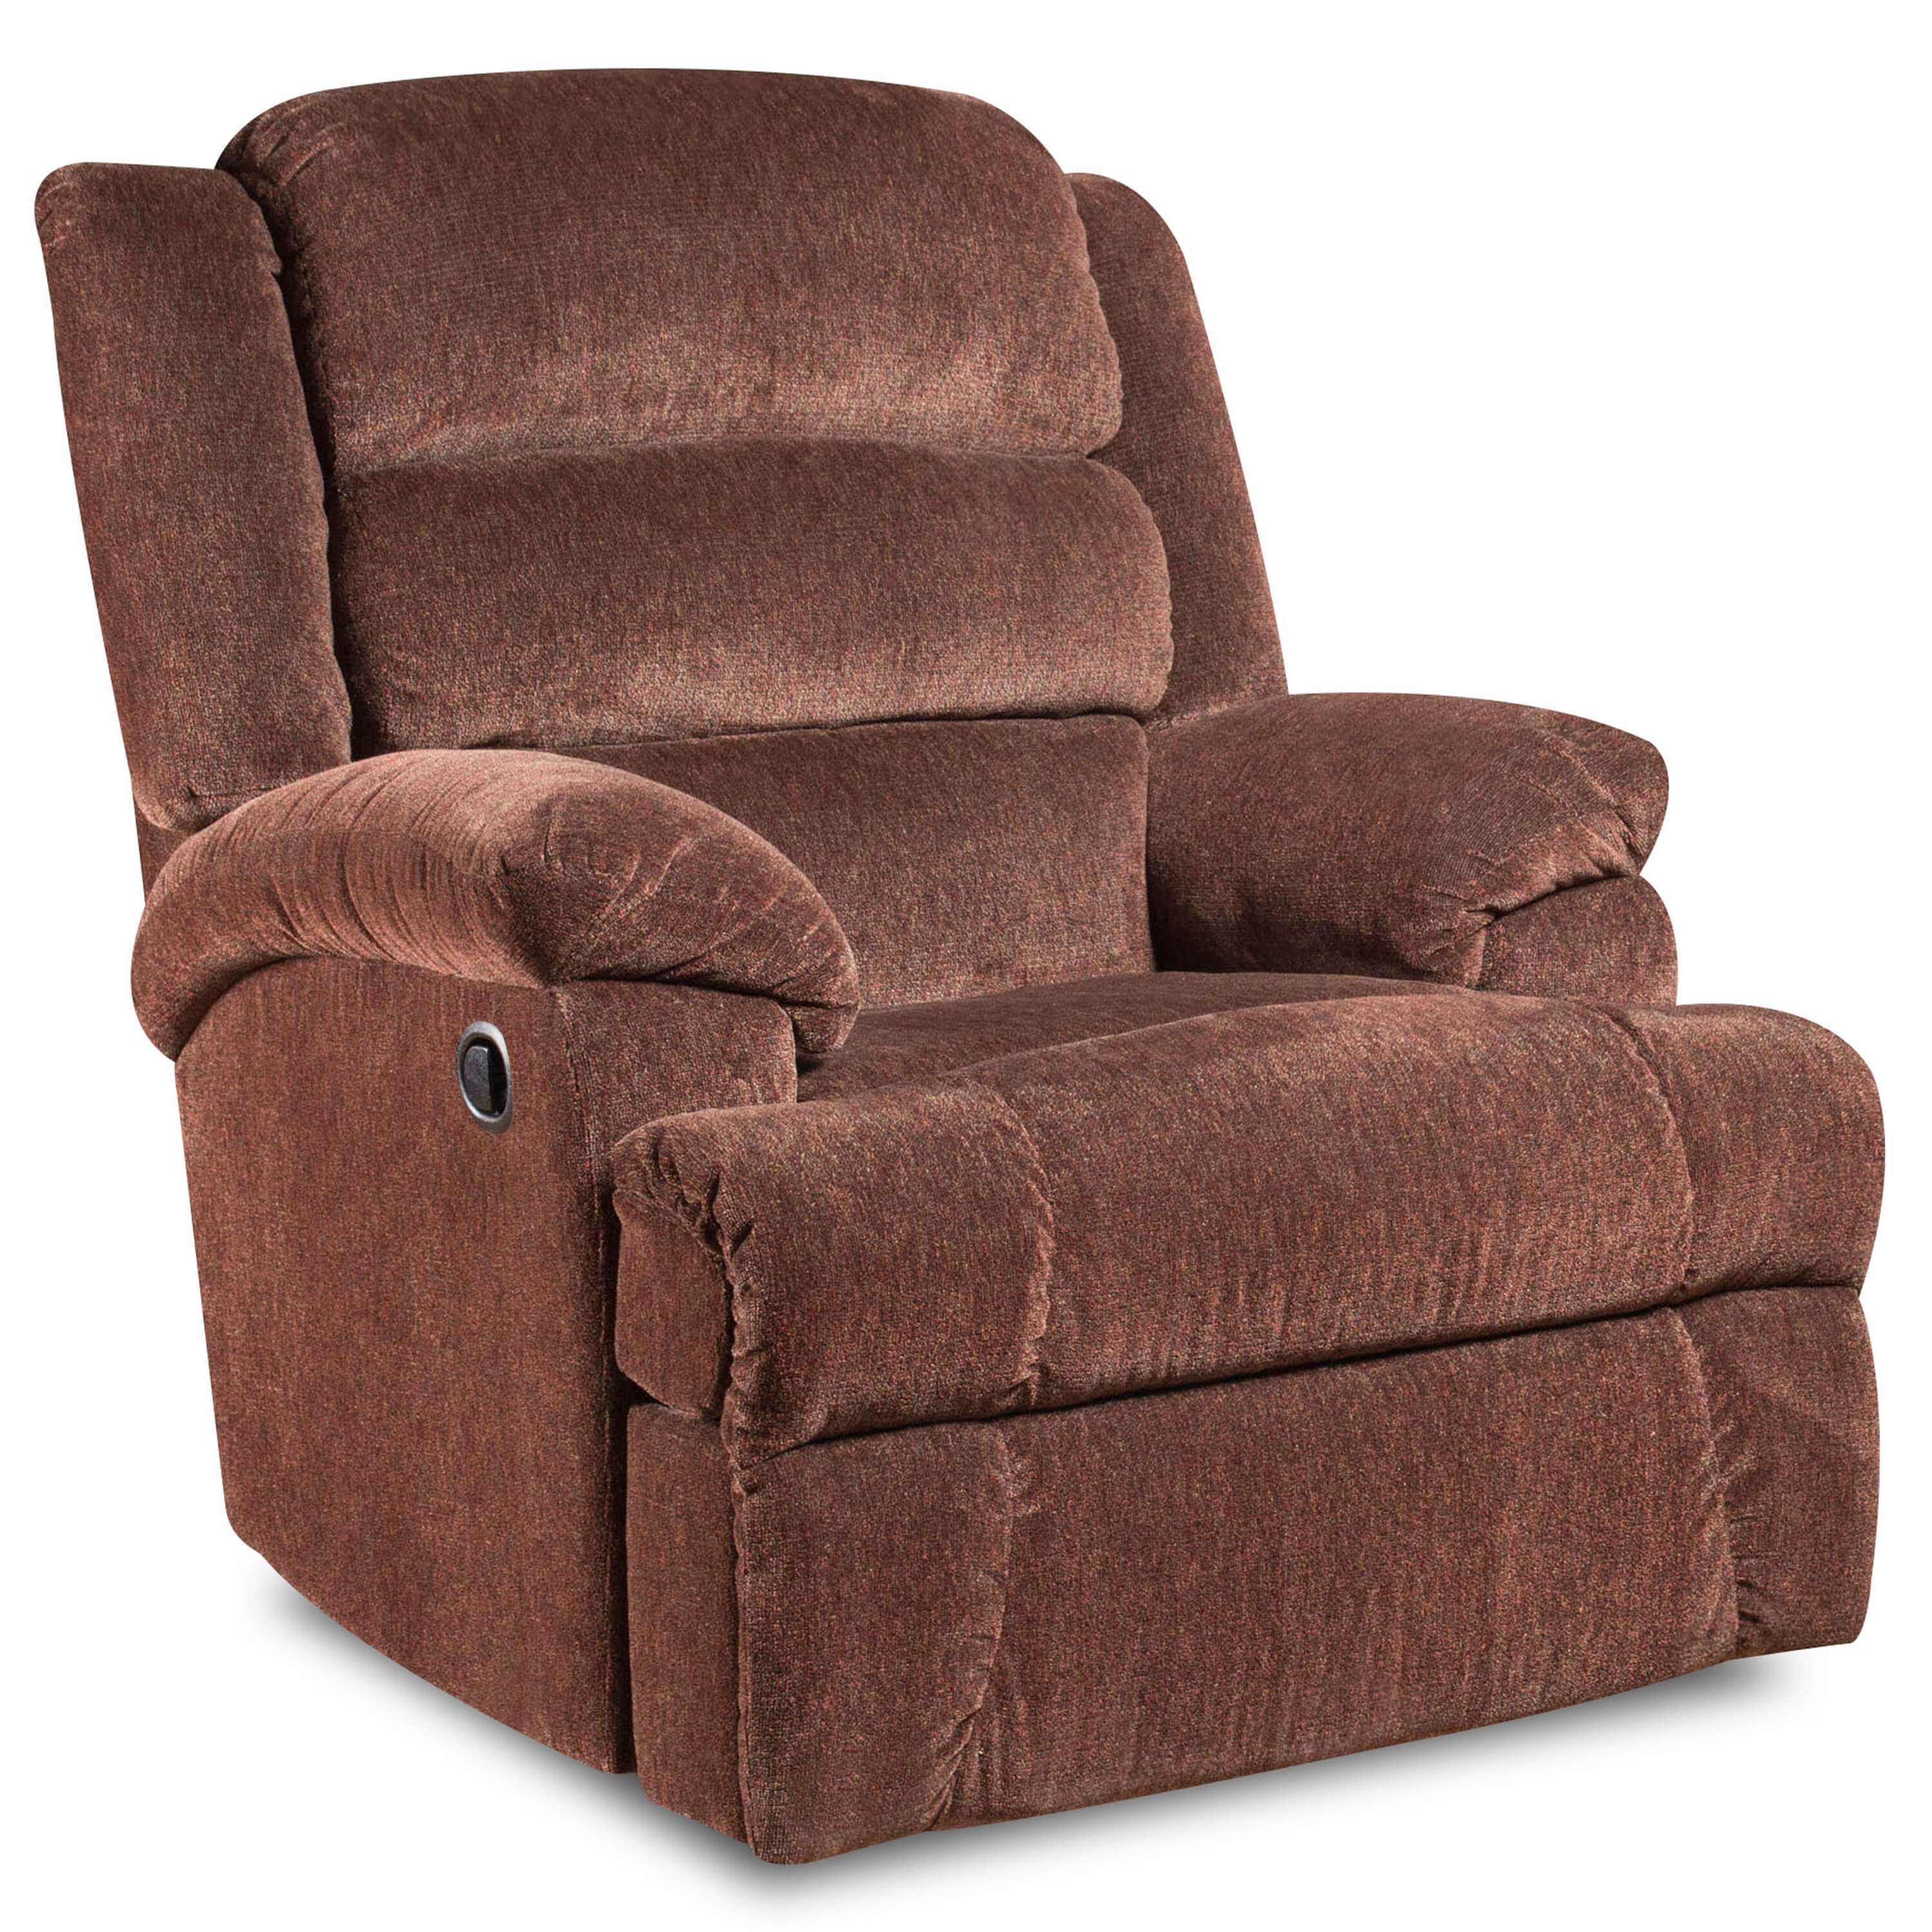 Modern recliner chair CUB AM 9960 7921 GG FLA